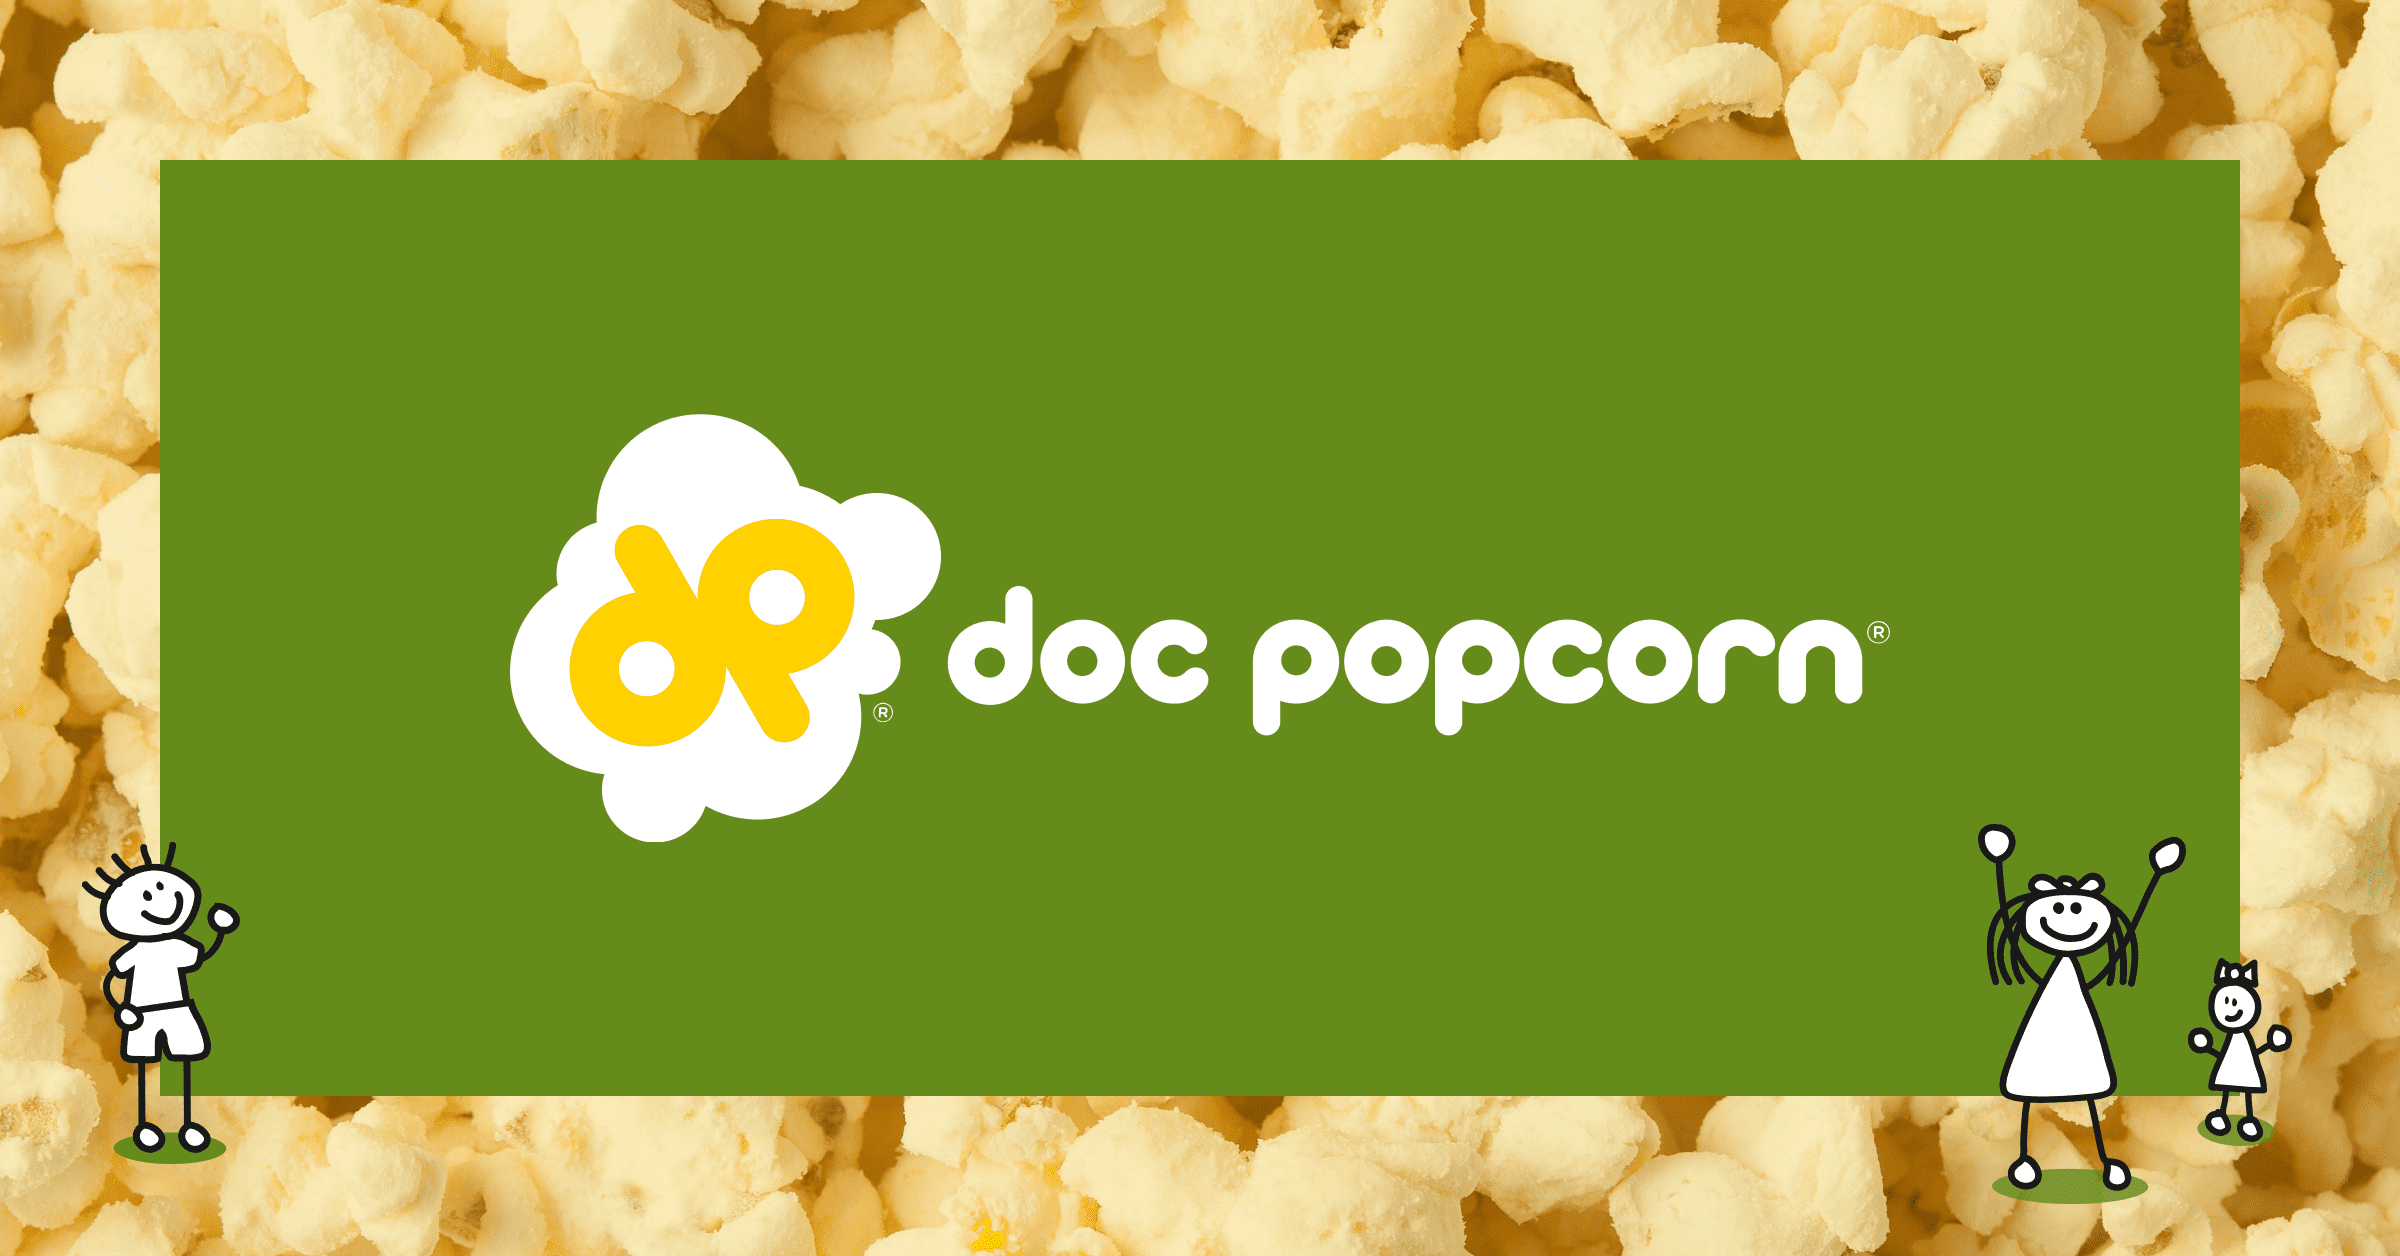 doc-popcorn-case-study